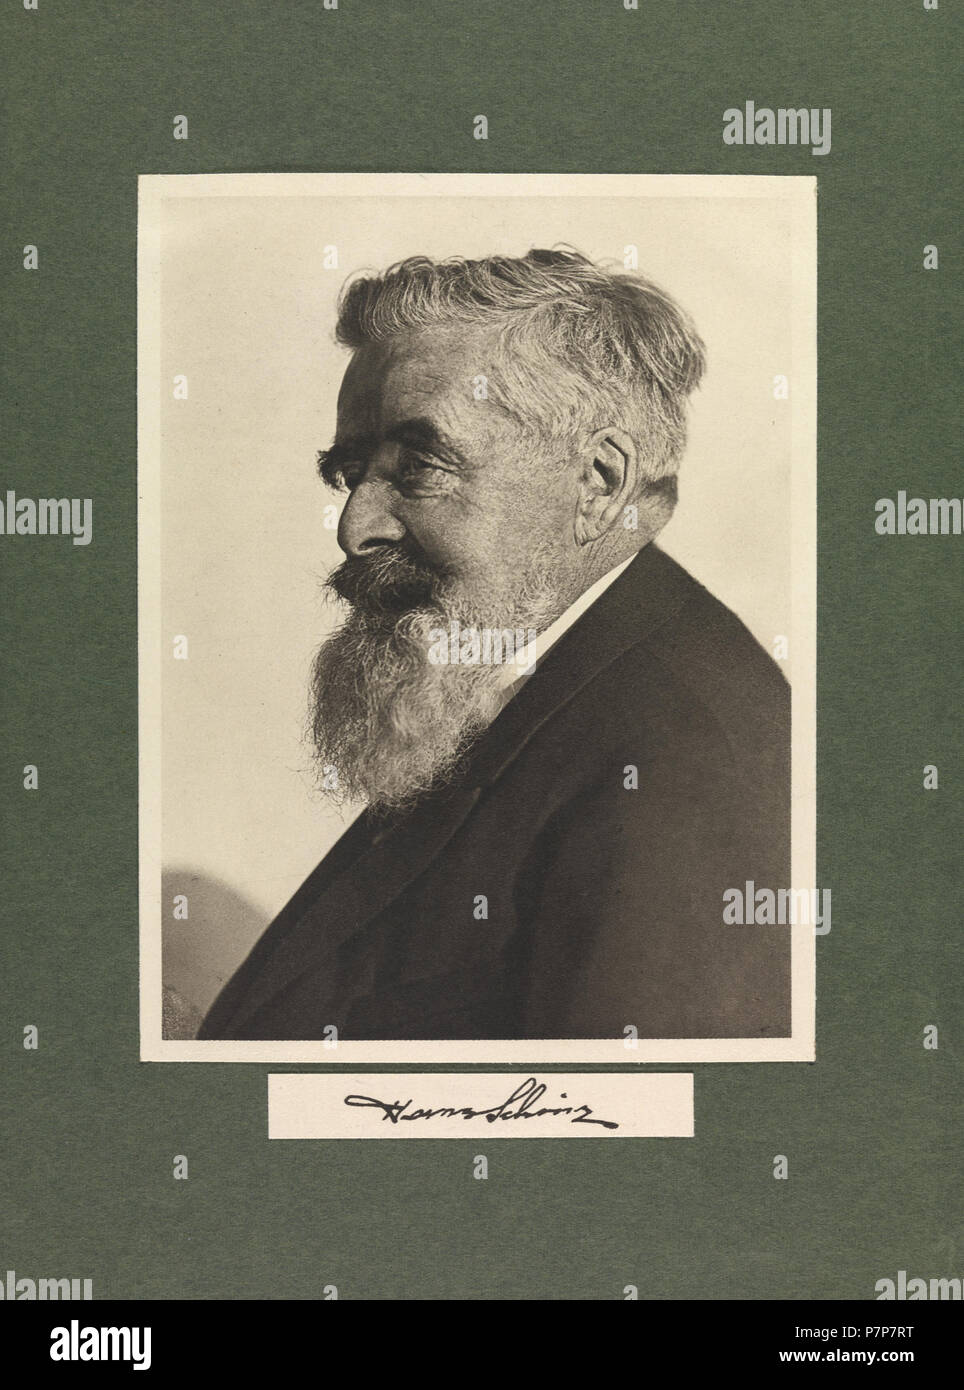 150 ETH-BIB-Schinz, Hans (1858-1941)-Portrait-Portr 06683 Stock Photo